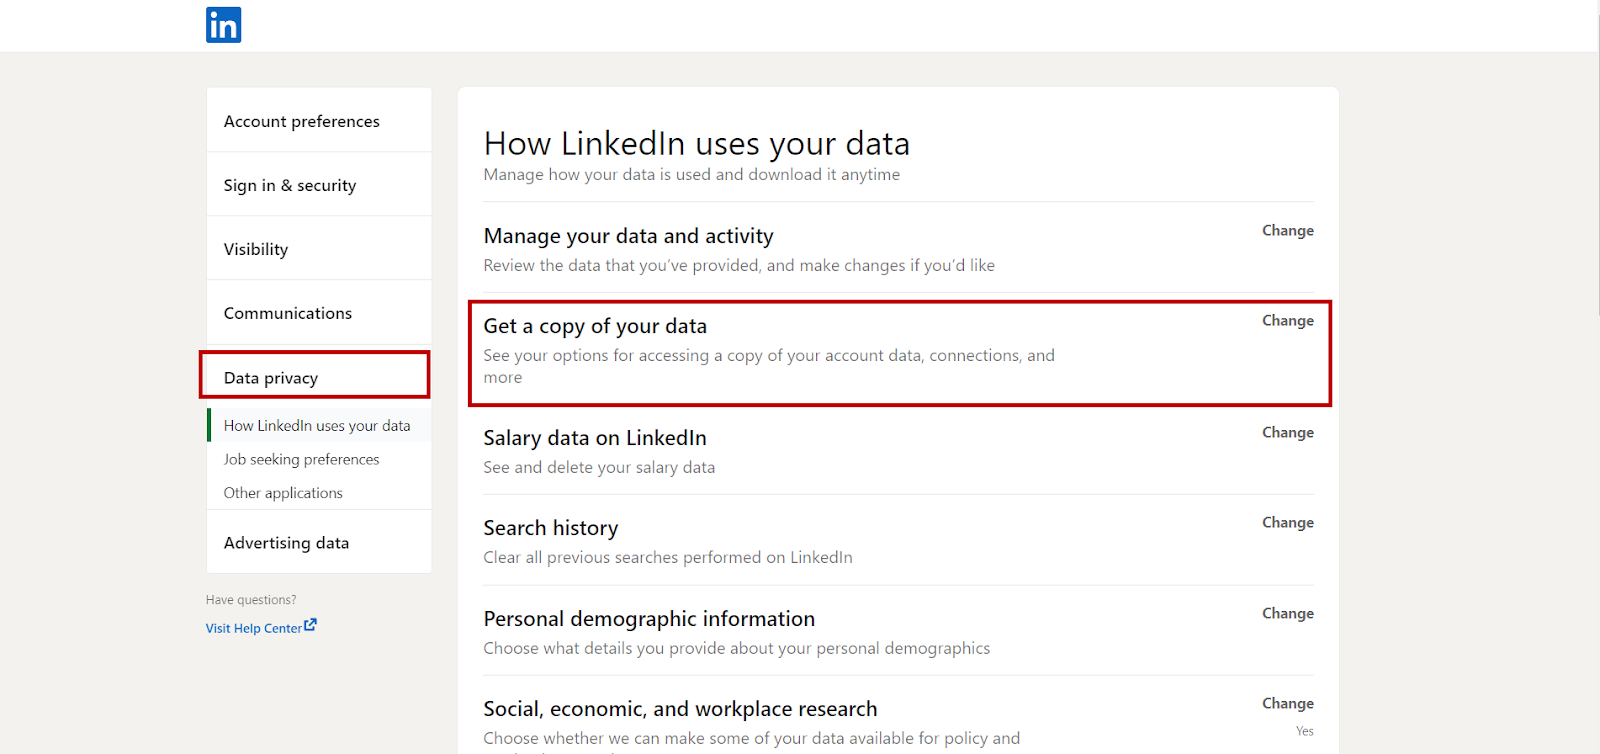 Download your LinkedIn data